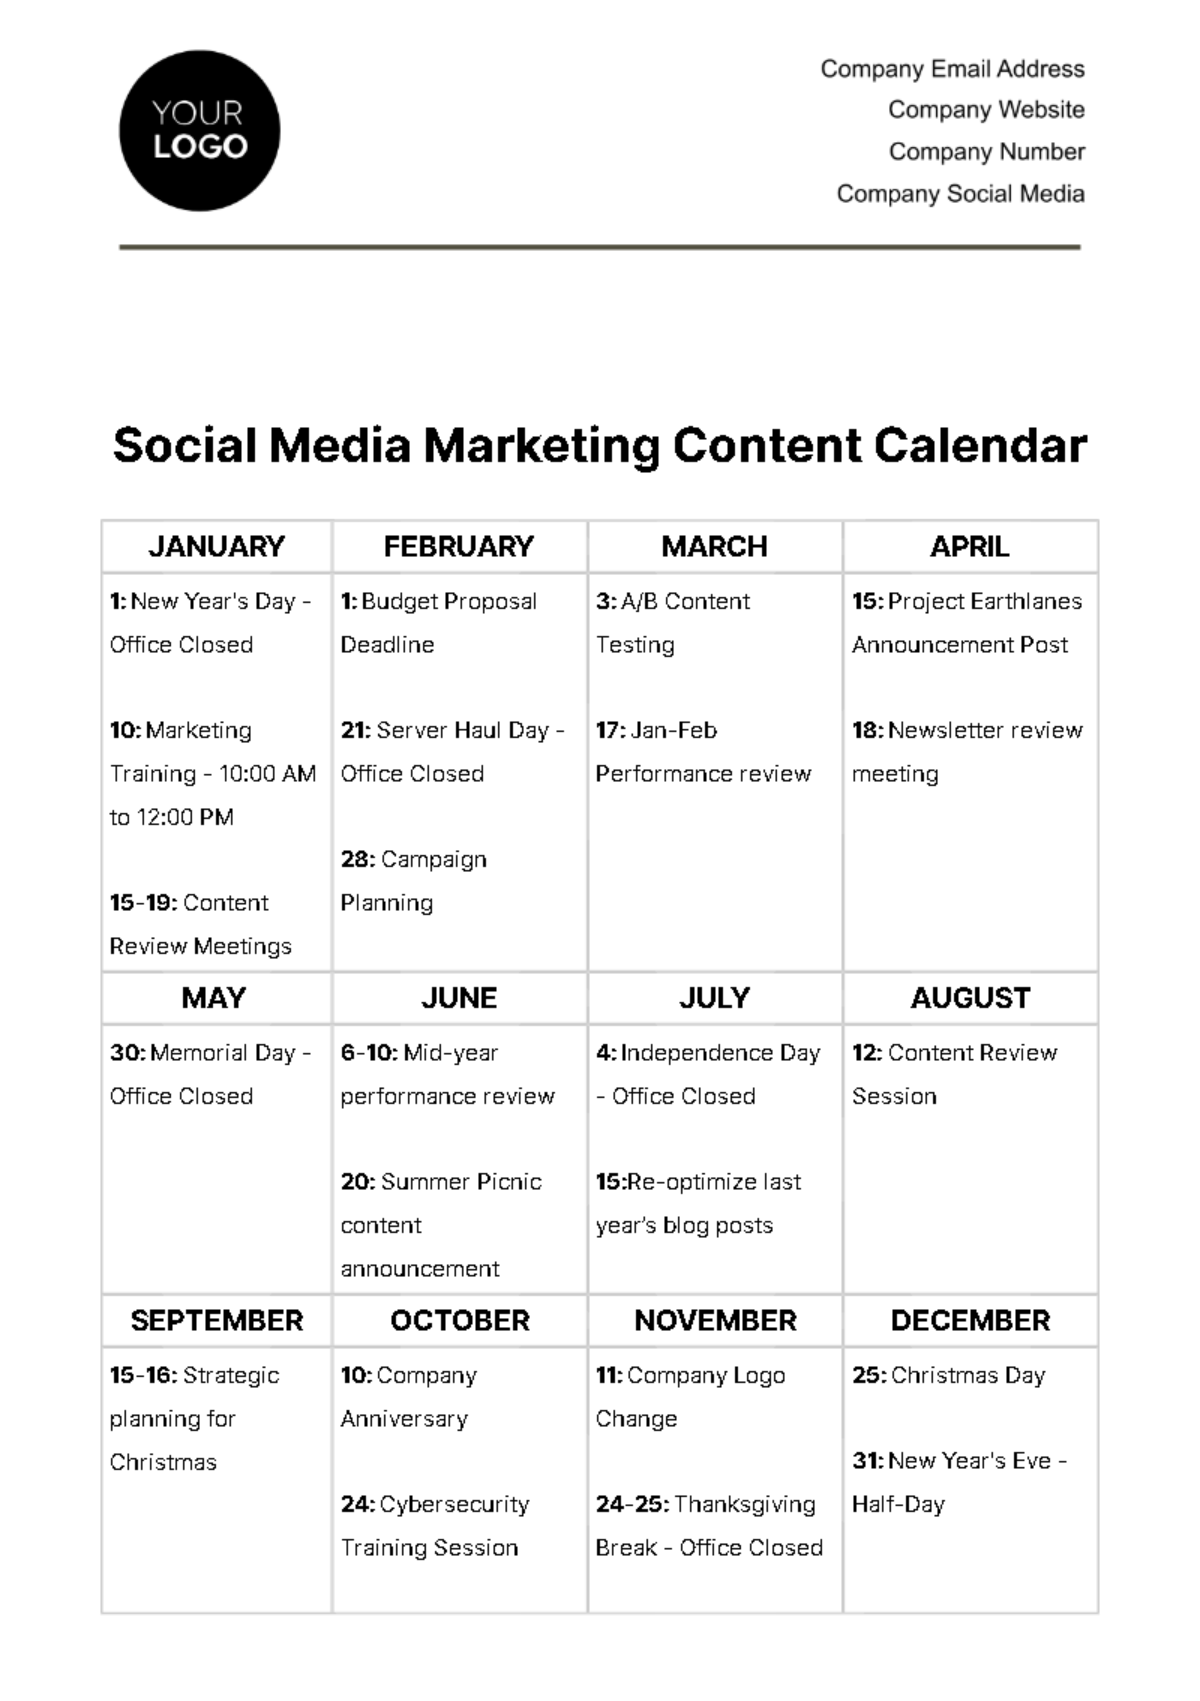 Free Social Media Marketing Content Calendar Schedule Template